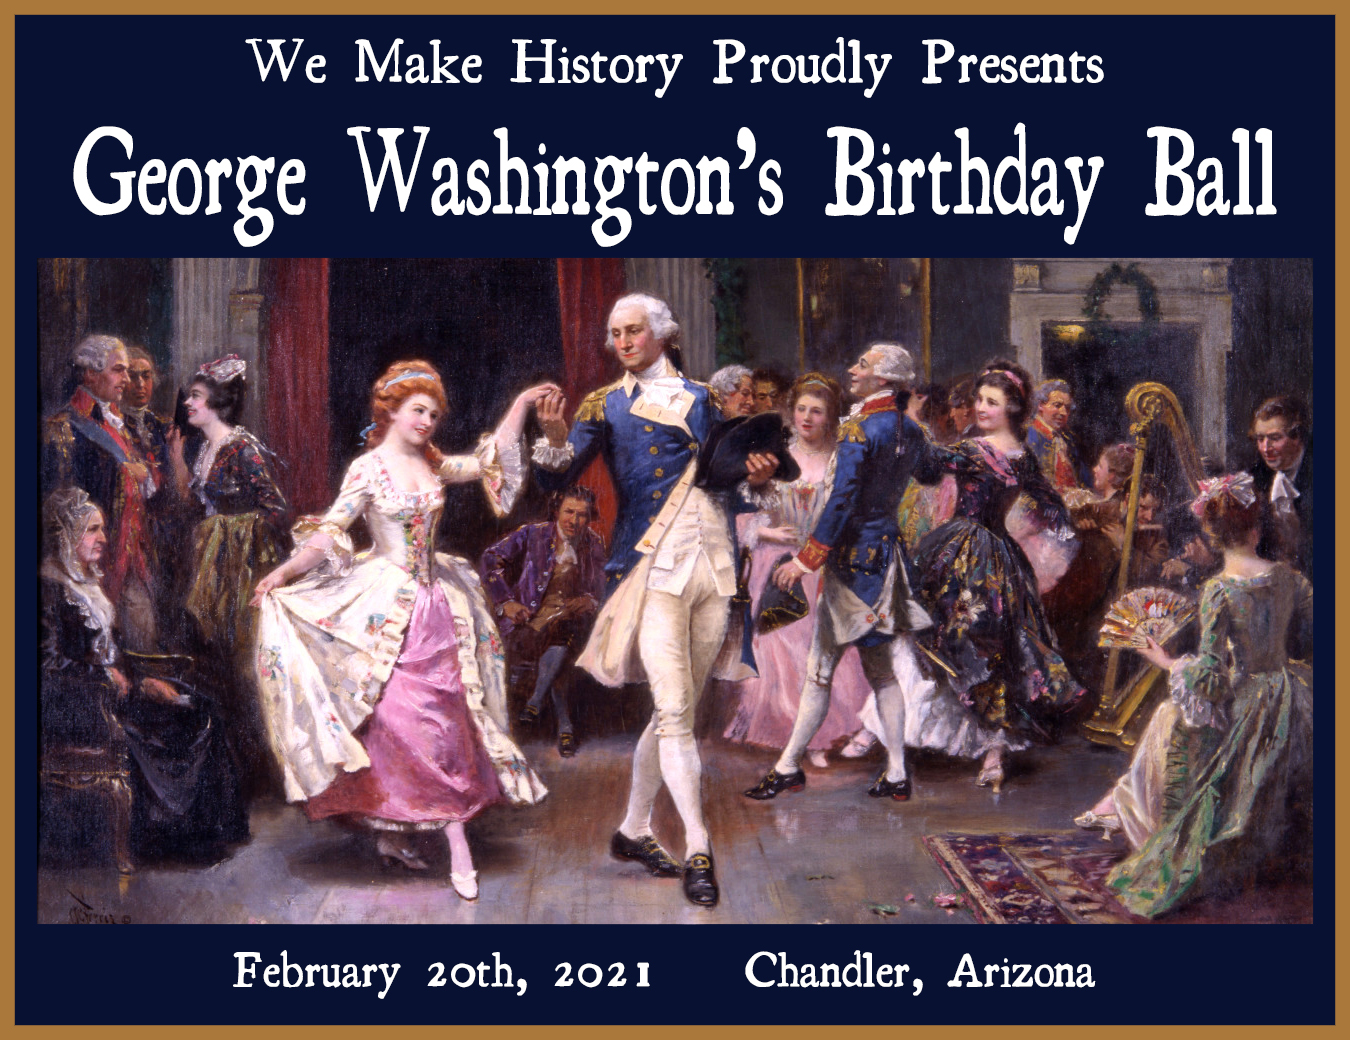 Washington's Birthday Ball We Make History